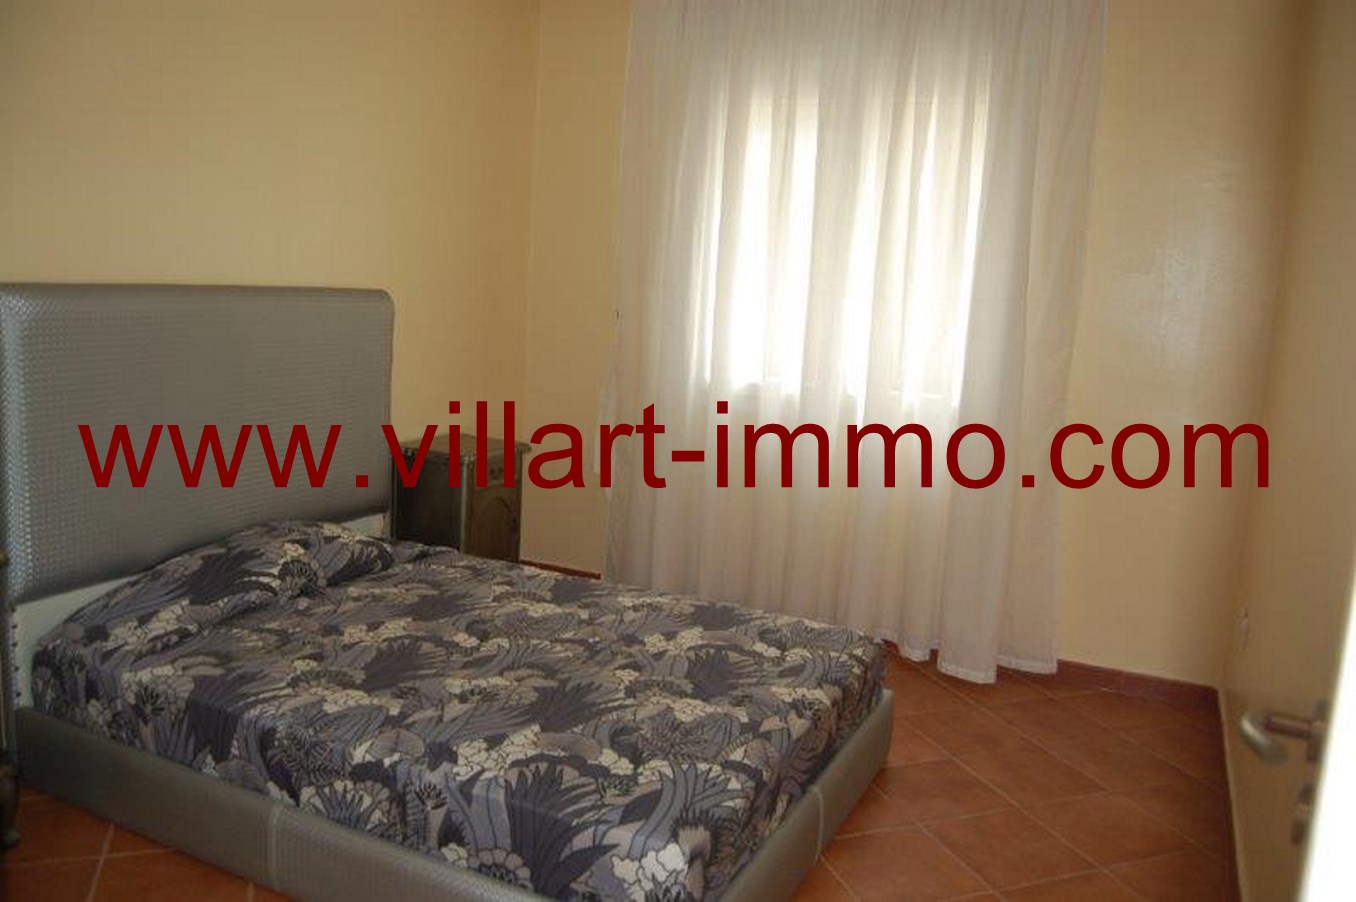 8-Location-Appartement- meublé-Tanger-chambre 2-L634-Villart-immo